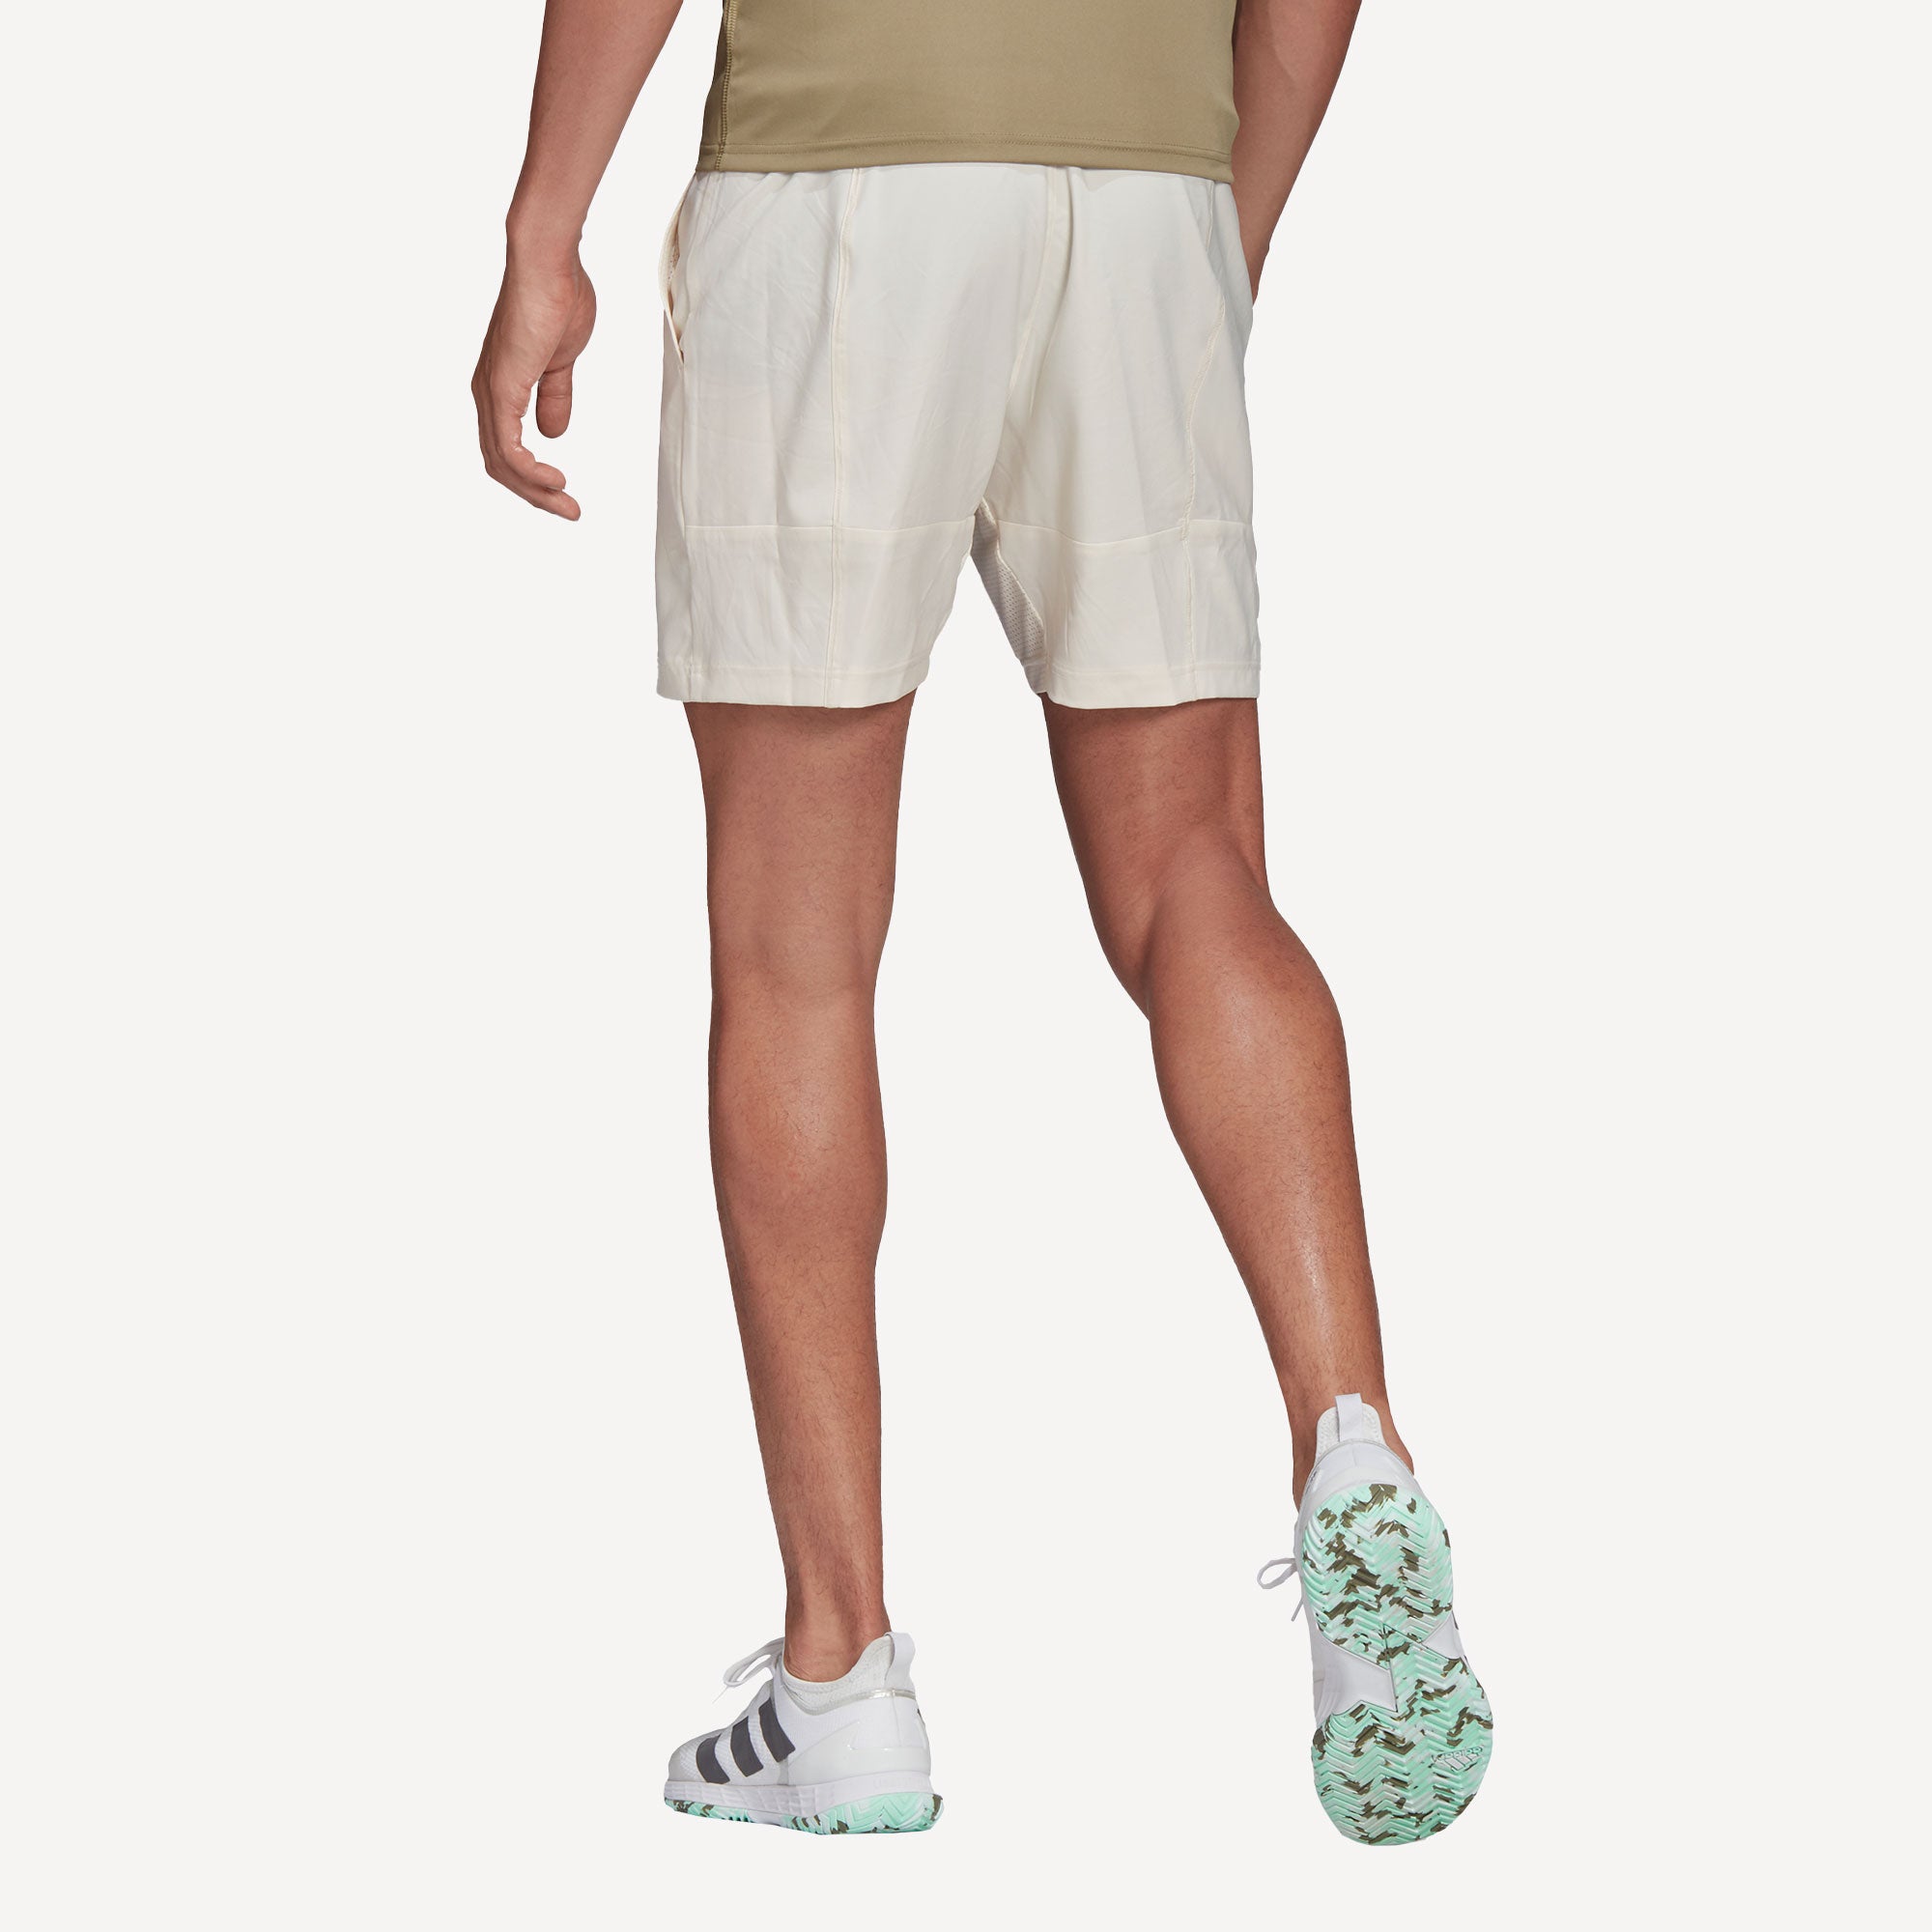 adidas Ergo Primeblue Men's 7-Inch Tennis Shorts White (2)